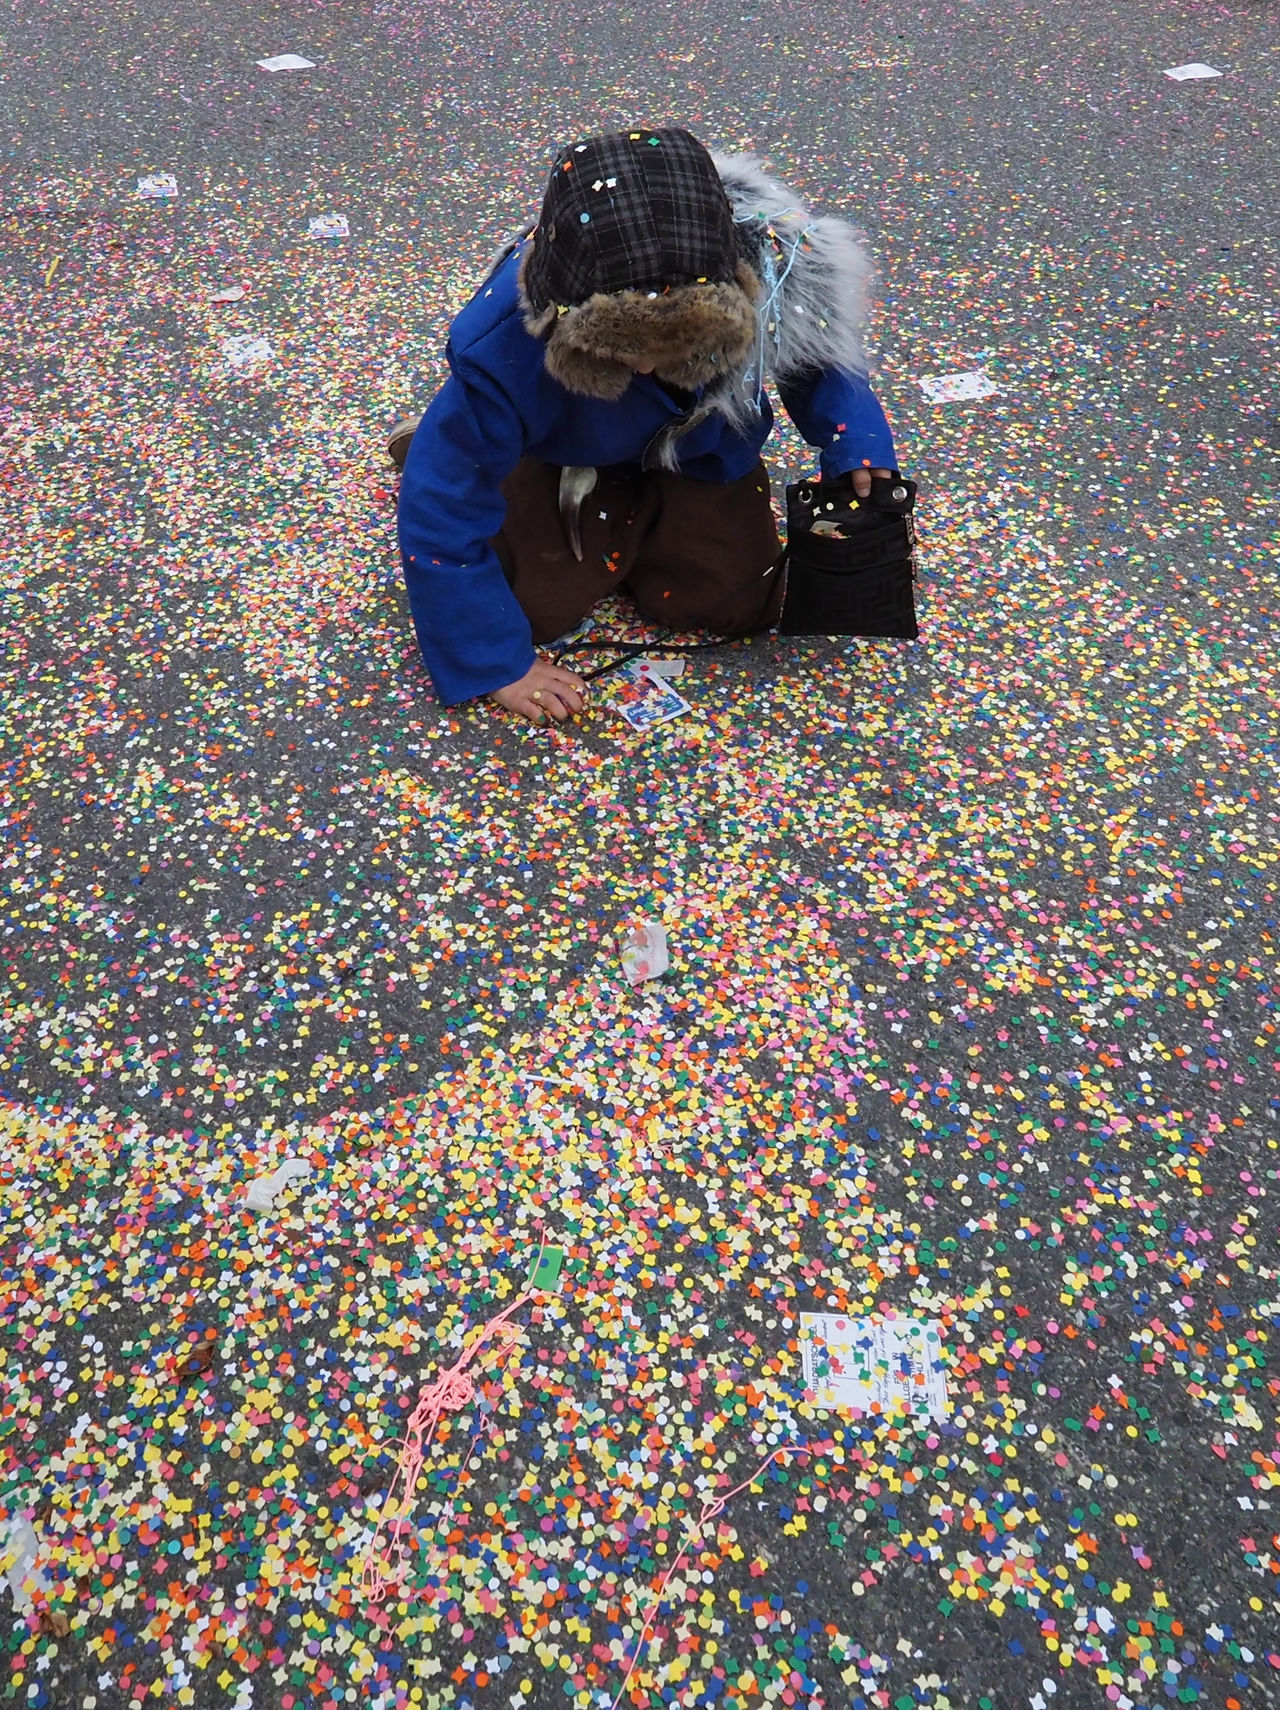 Boy collecting confetti